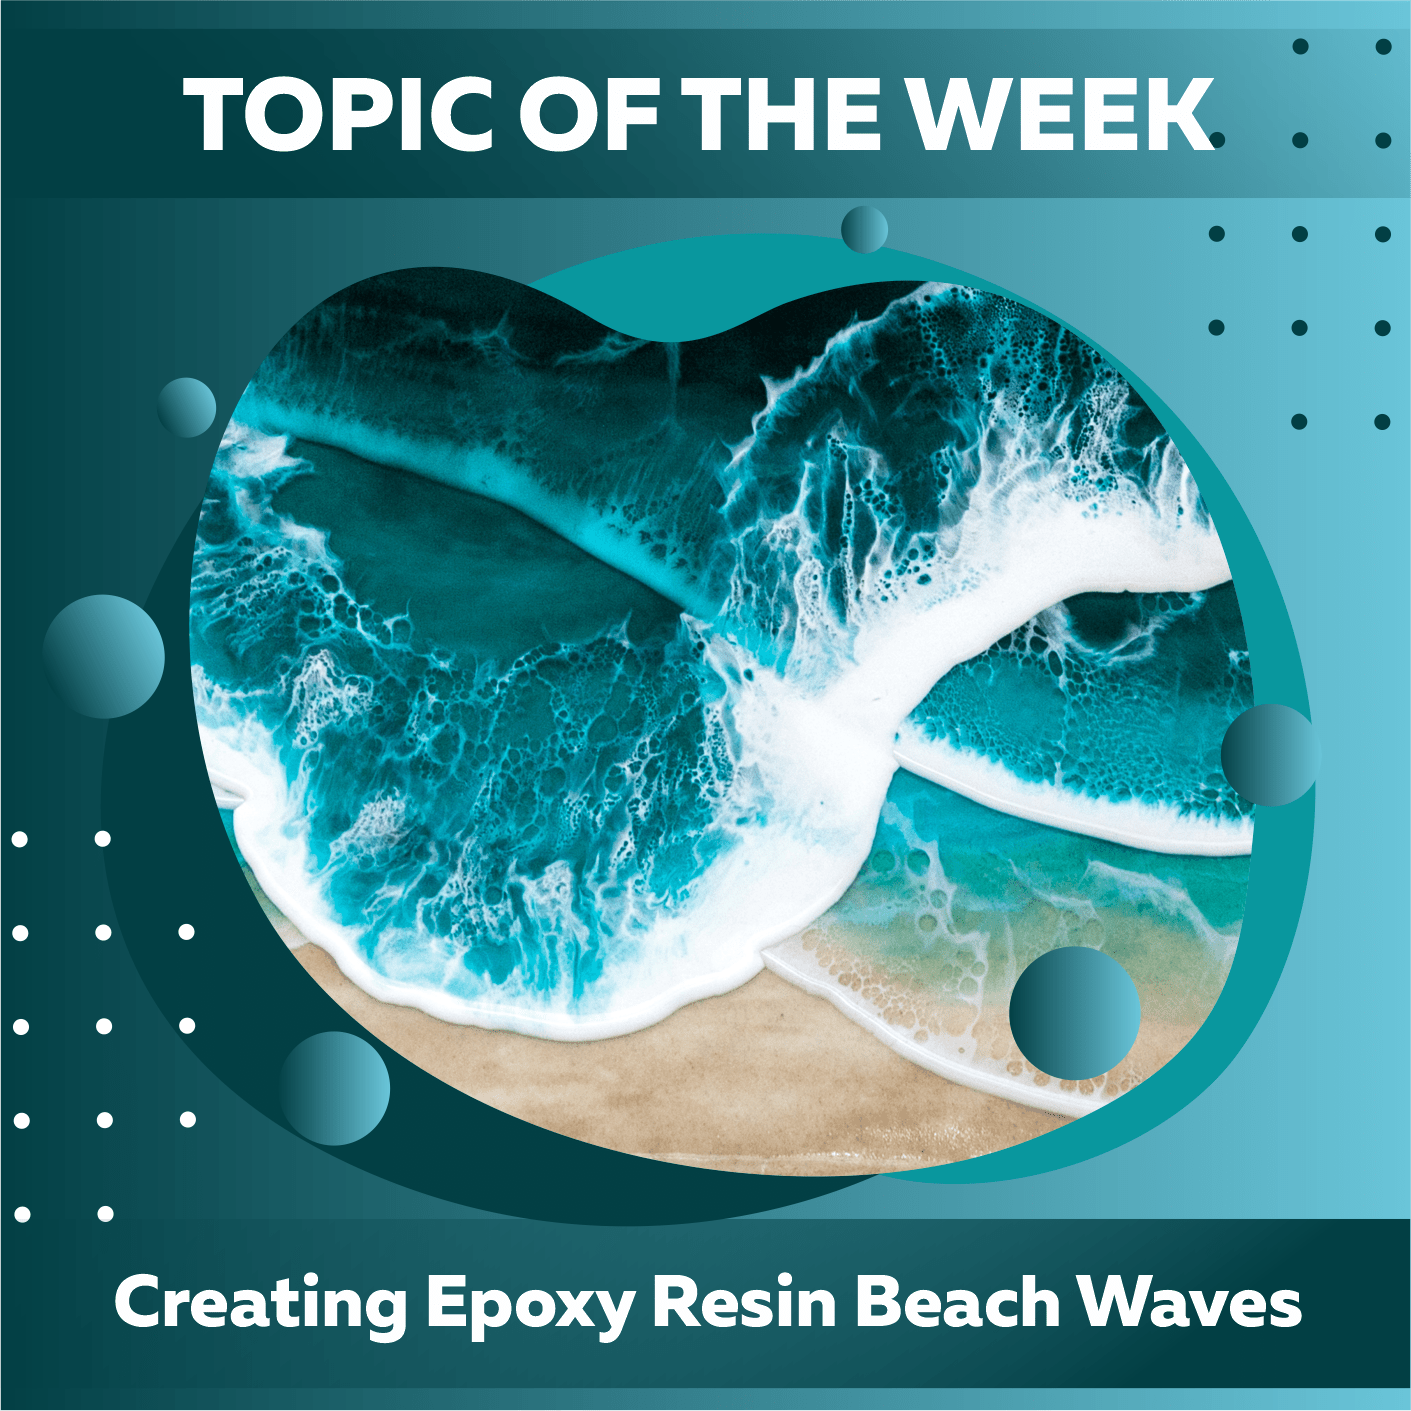 Creating Epoxy Resin Beach Waves: